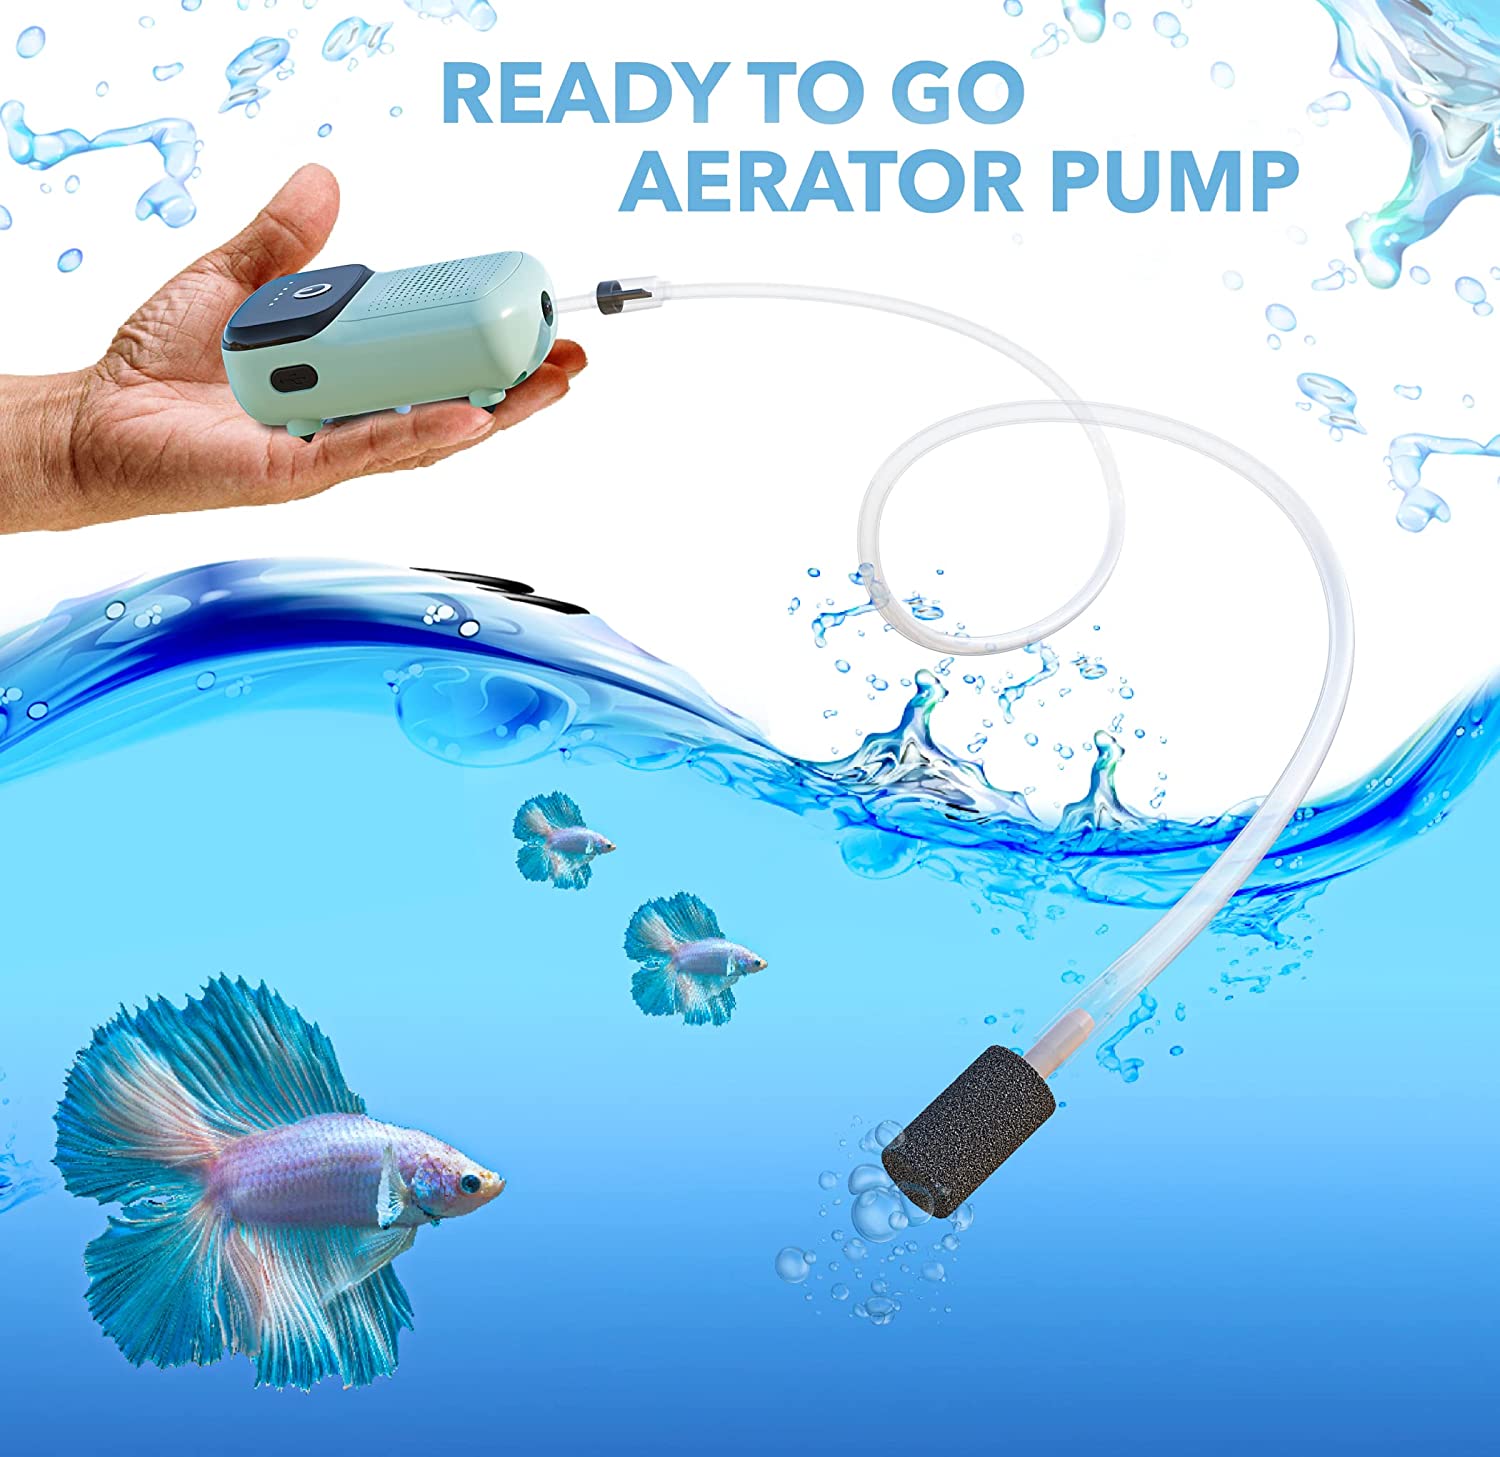 Skywin Fish Aerator Pump - Rechargeable Battery Powered Aquarium